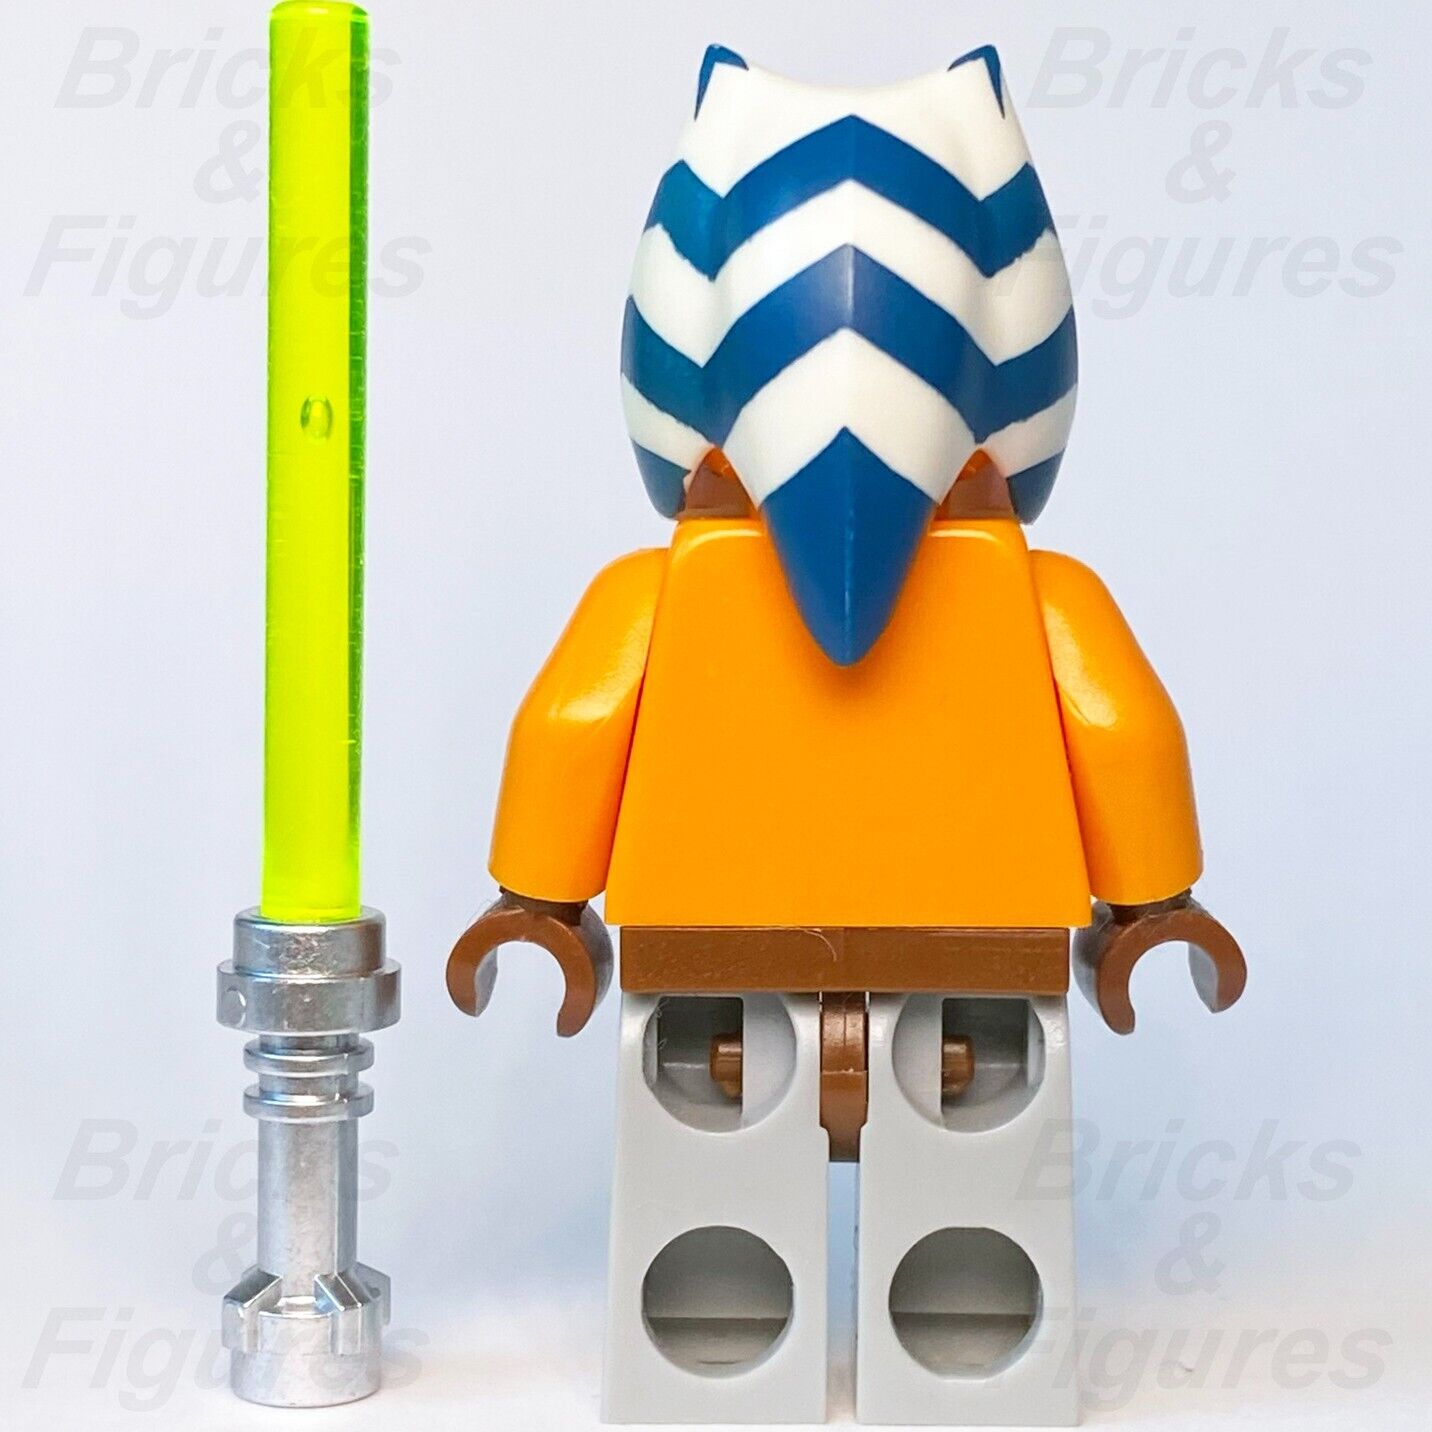 LEGO Star Wars Ahsoka Tano Minifigure Jedi Padawan The Clone Wars 7751 sw0192